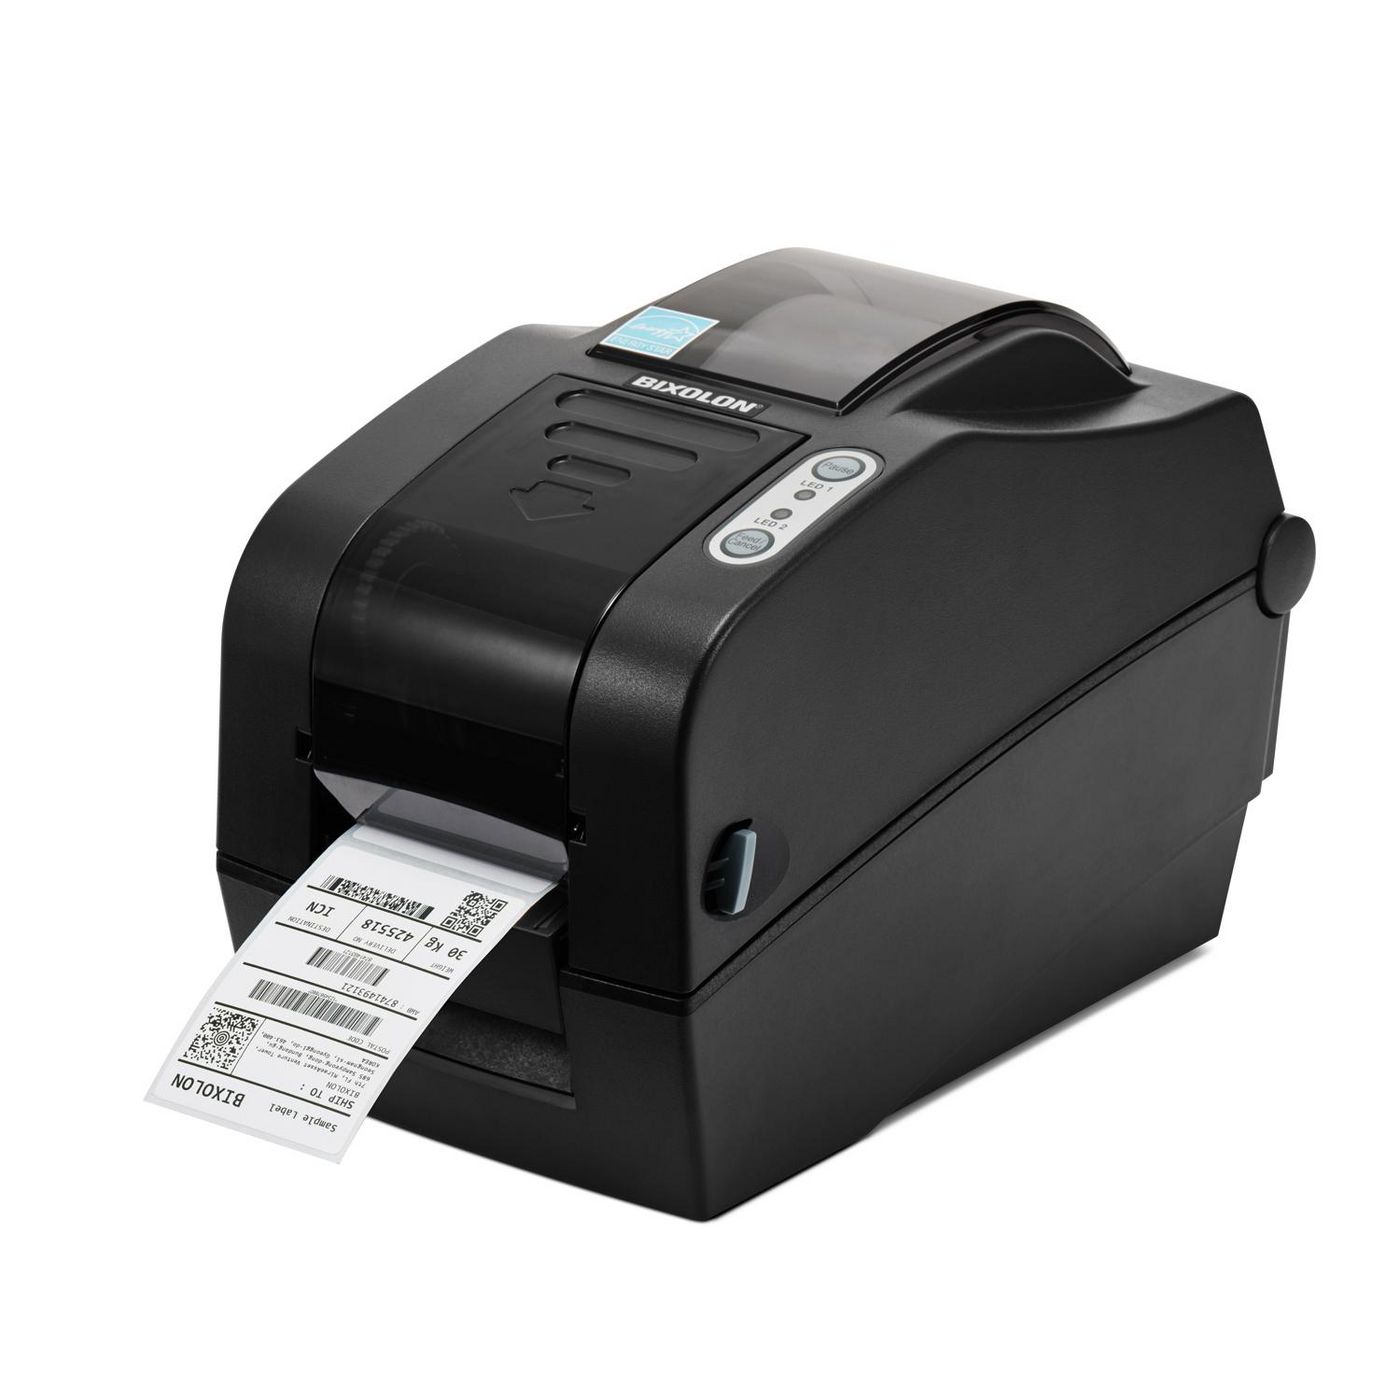 Slp-tx220deg -  Label Printer - Direct Thermal - USB / Parallel